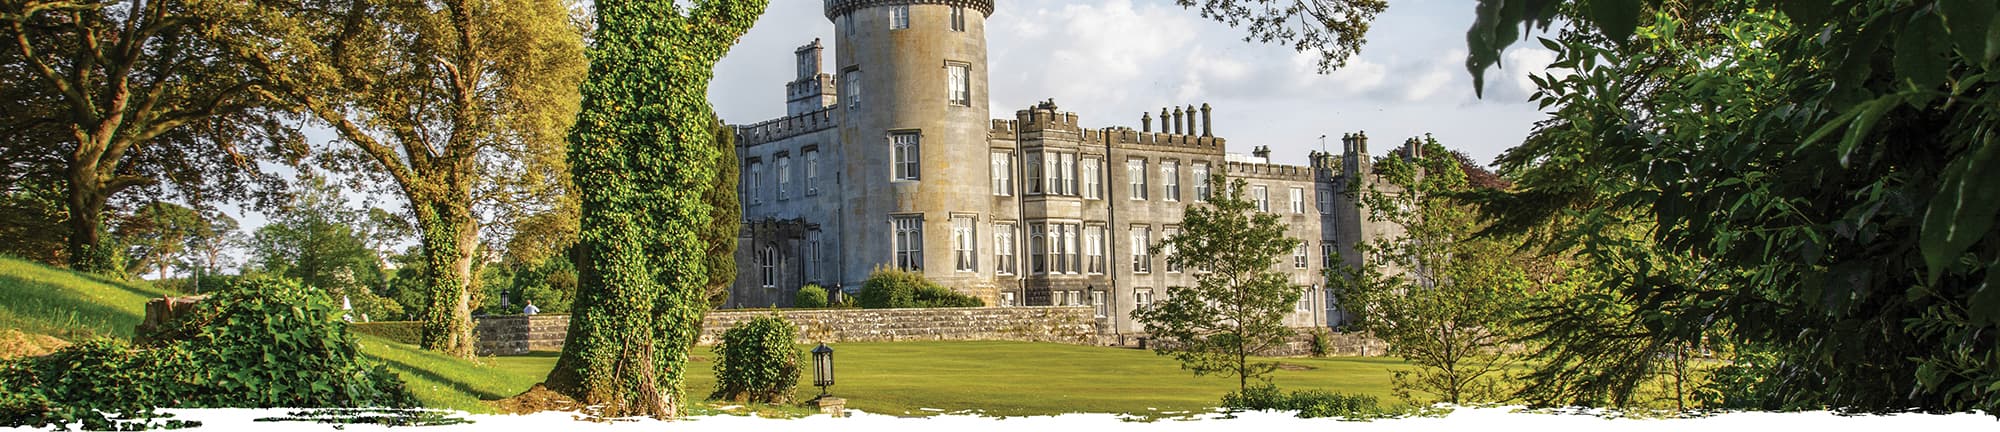 Ireland castle hotel